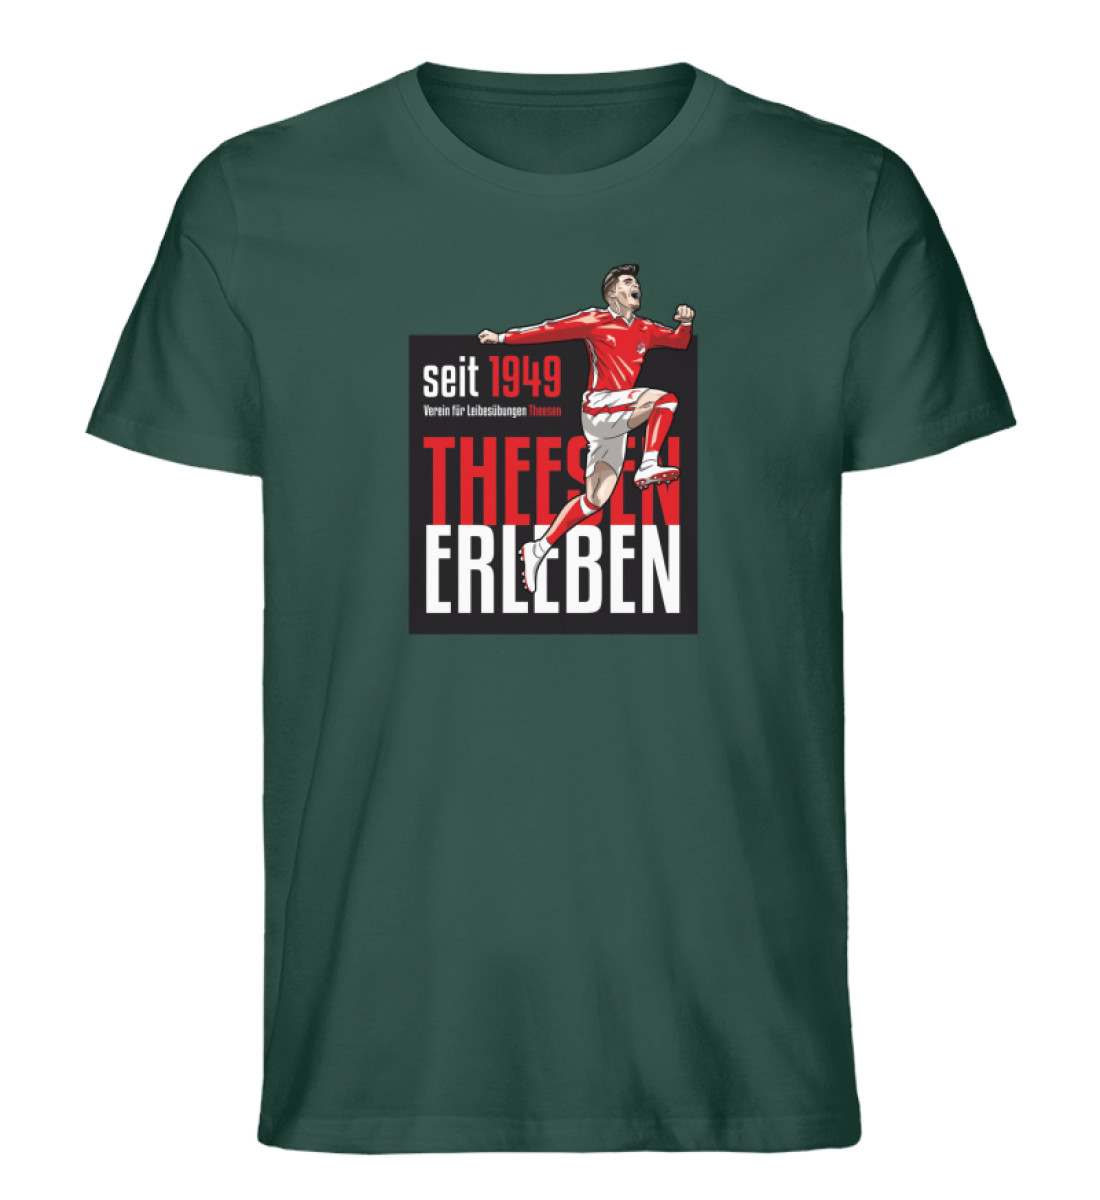 Theesen erleben - Herren Premium Organic Shirt-7112